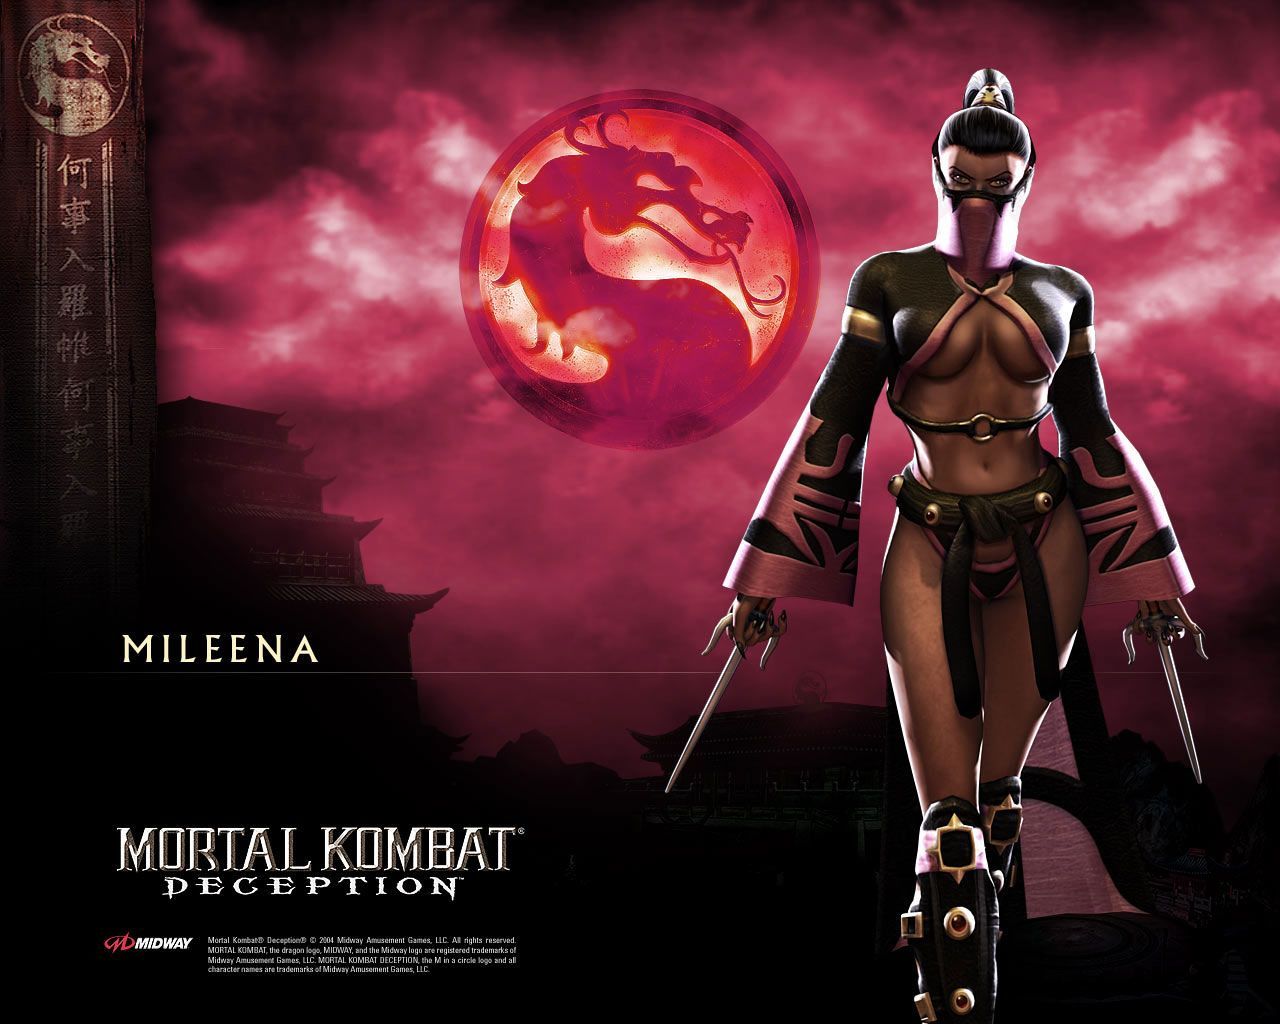 Mortal Kombat Background 1280×1024 Mortal Kombat Armageddon Wallpaper (50 Wallpaper). Adorable. Mortal kombat, Mortal kombat characters, Mortal kombat memes